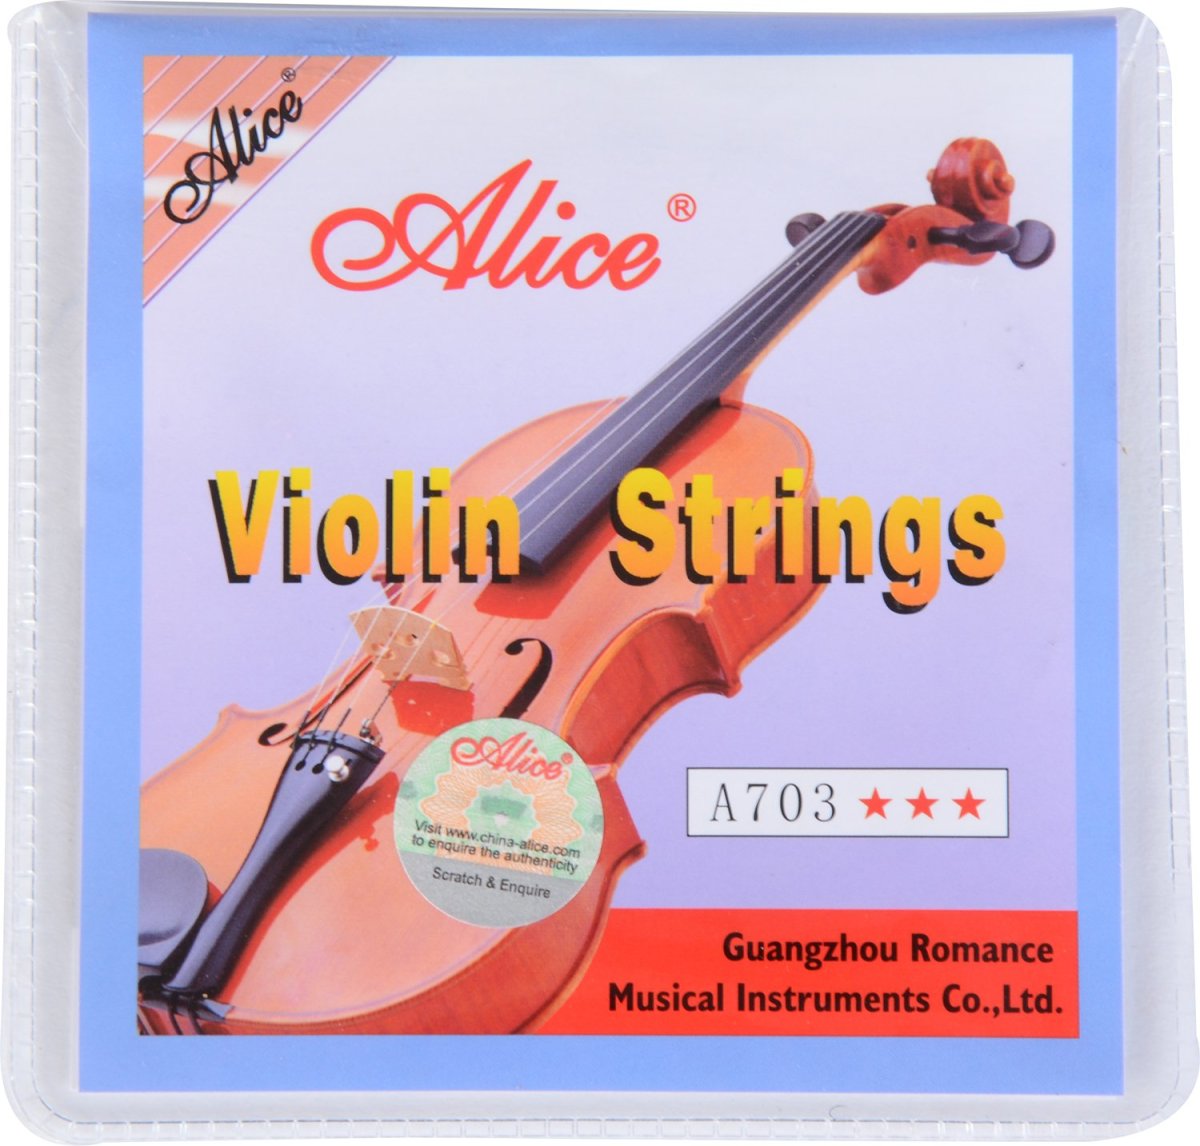 premium-violin-strings-thomastik-vision-titanium-solo-violin-strings-set-review